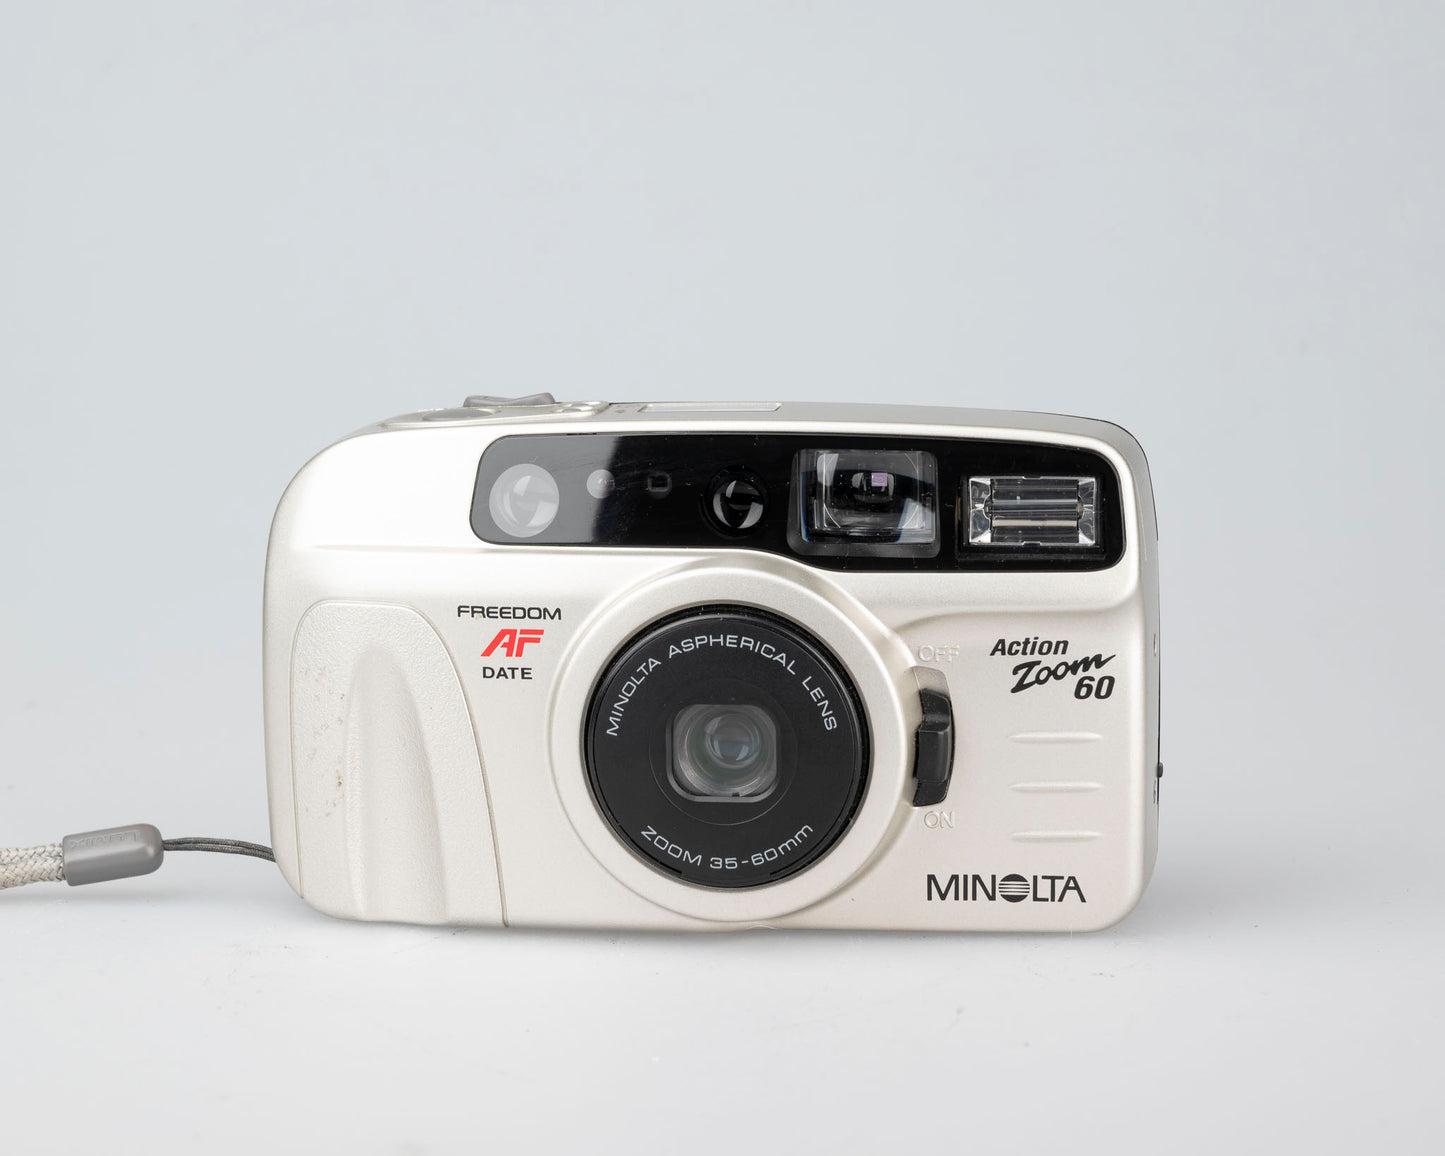 Minolta Freedom Action Zoom 60 35mm camera (serial 38333695)